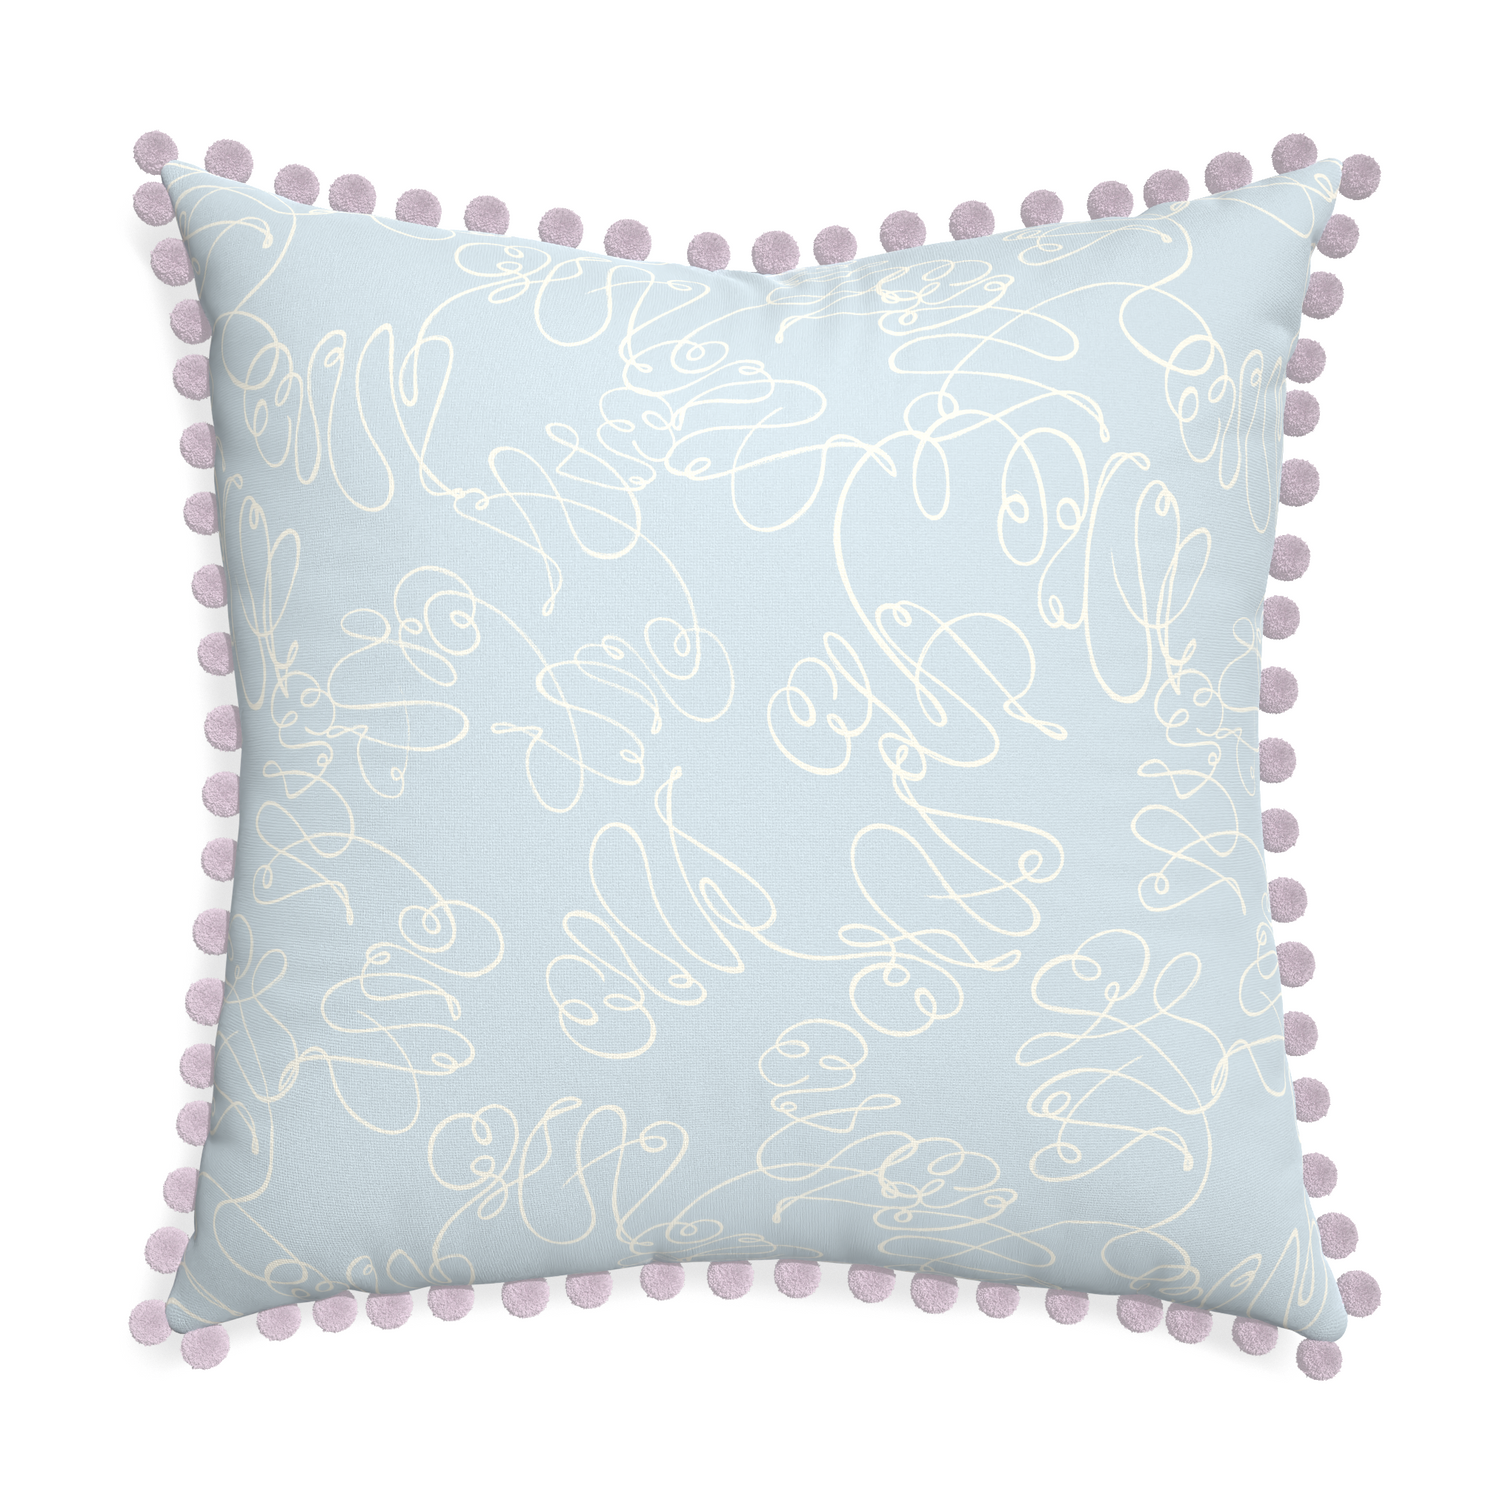 Euro-sham mirabella custom pillow with l on white background